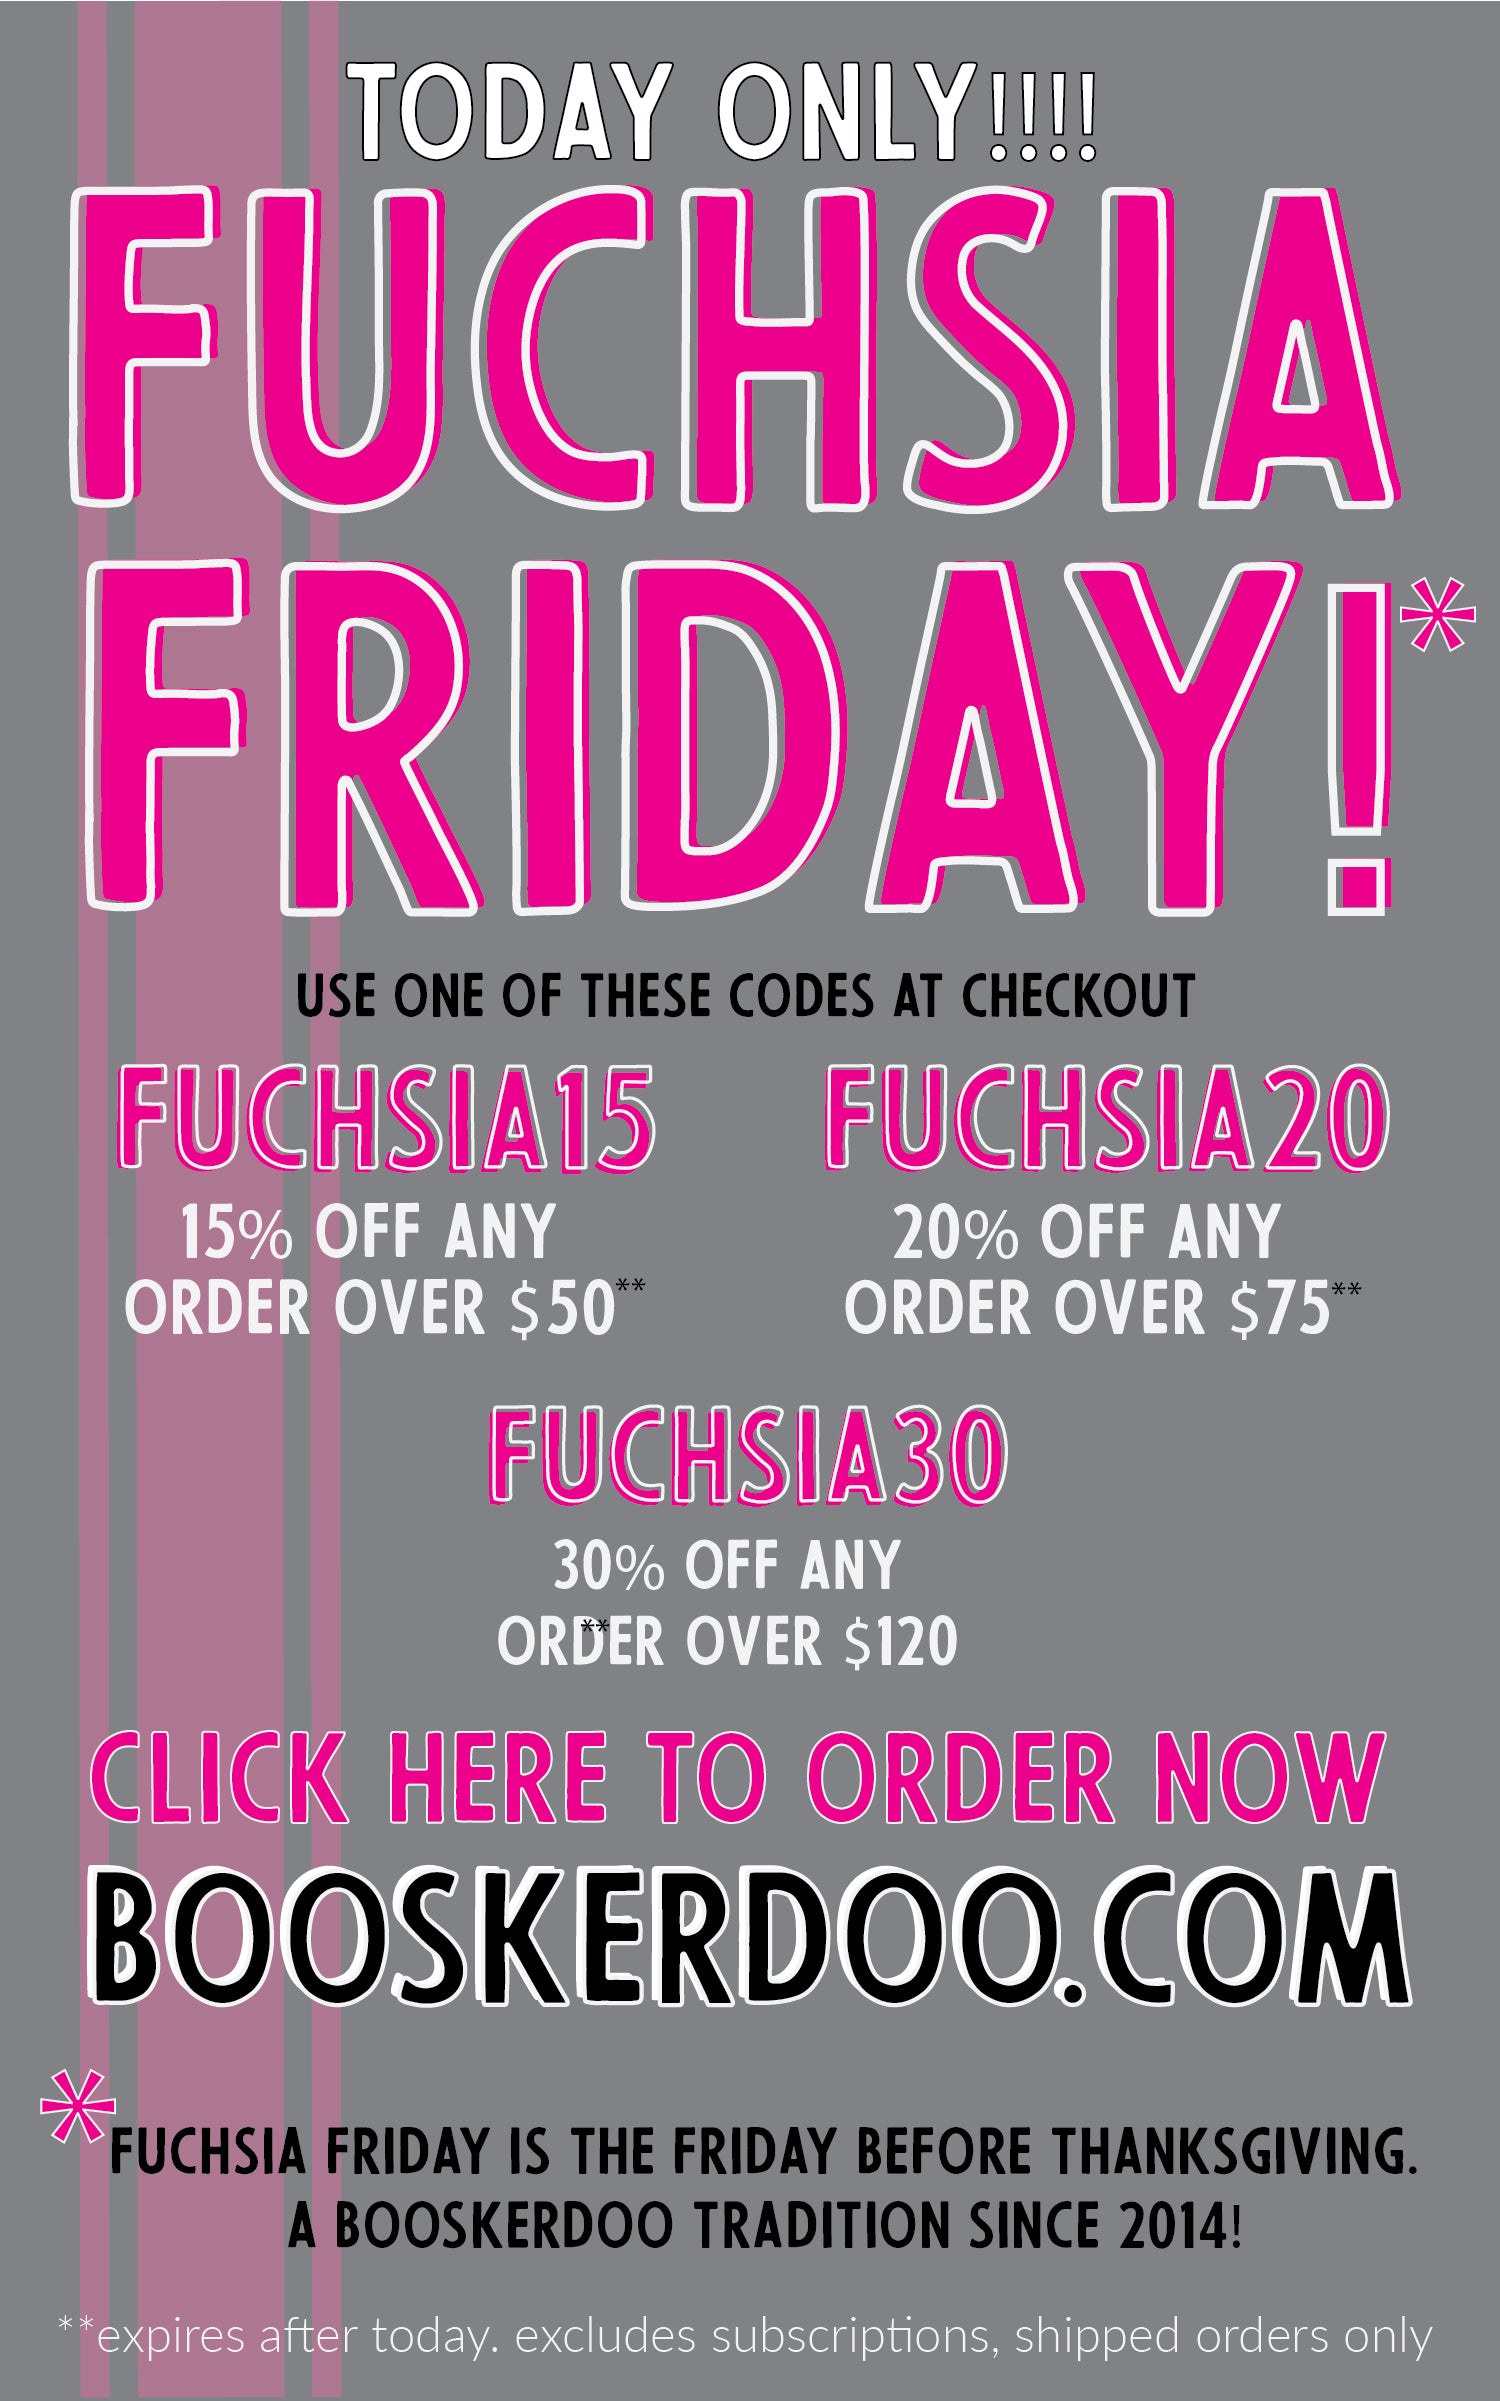 Get 30% OFF on Fuchsia Friday, November 17